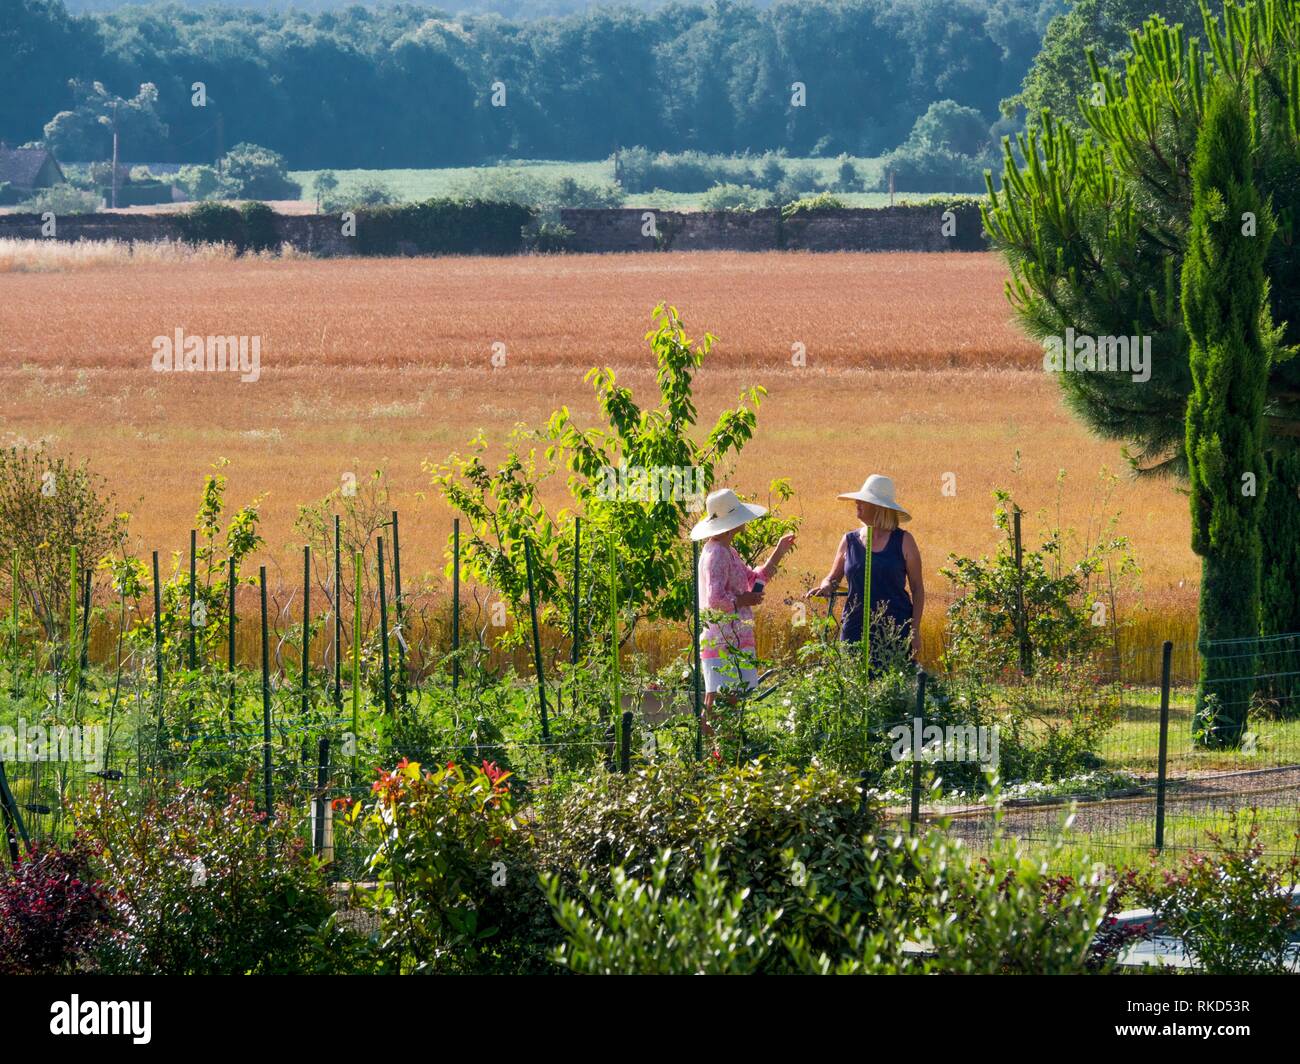 Gardeners in rural environment. France Stock Photo